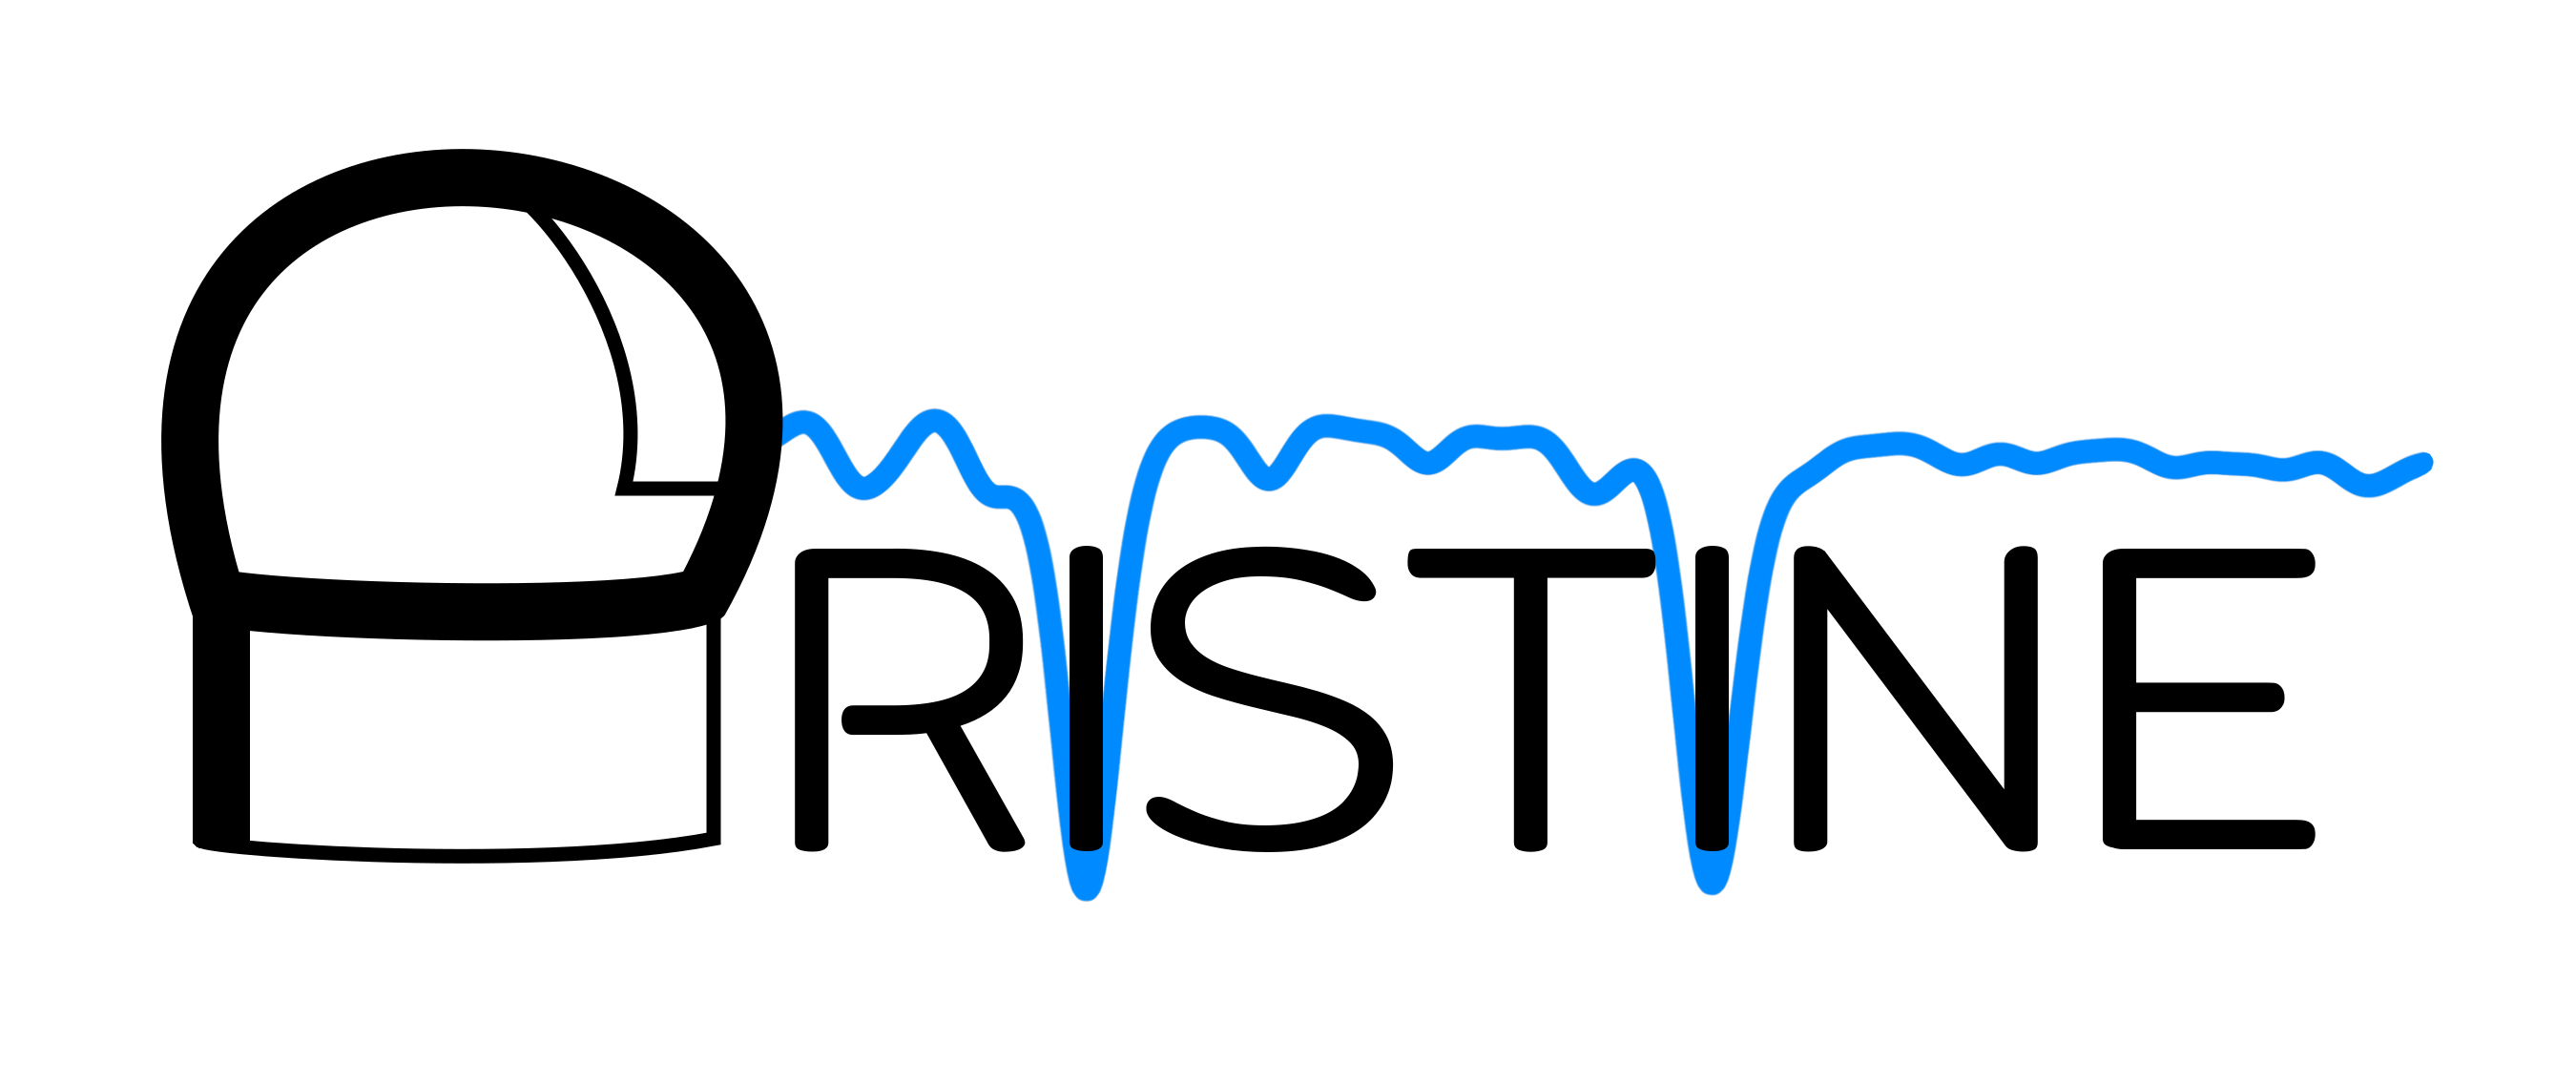 Pristine logo